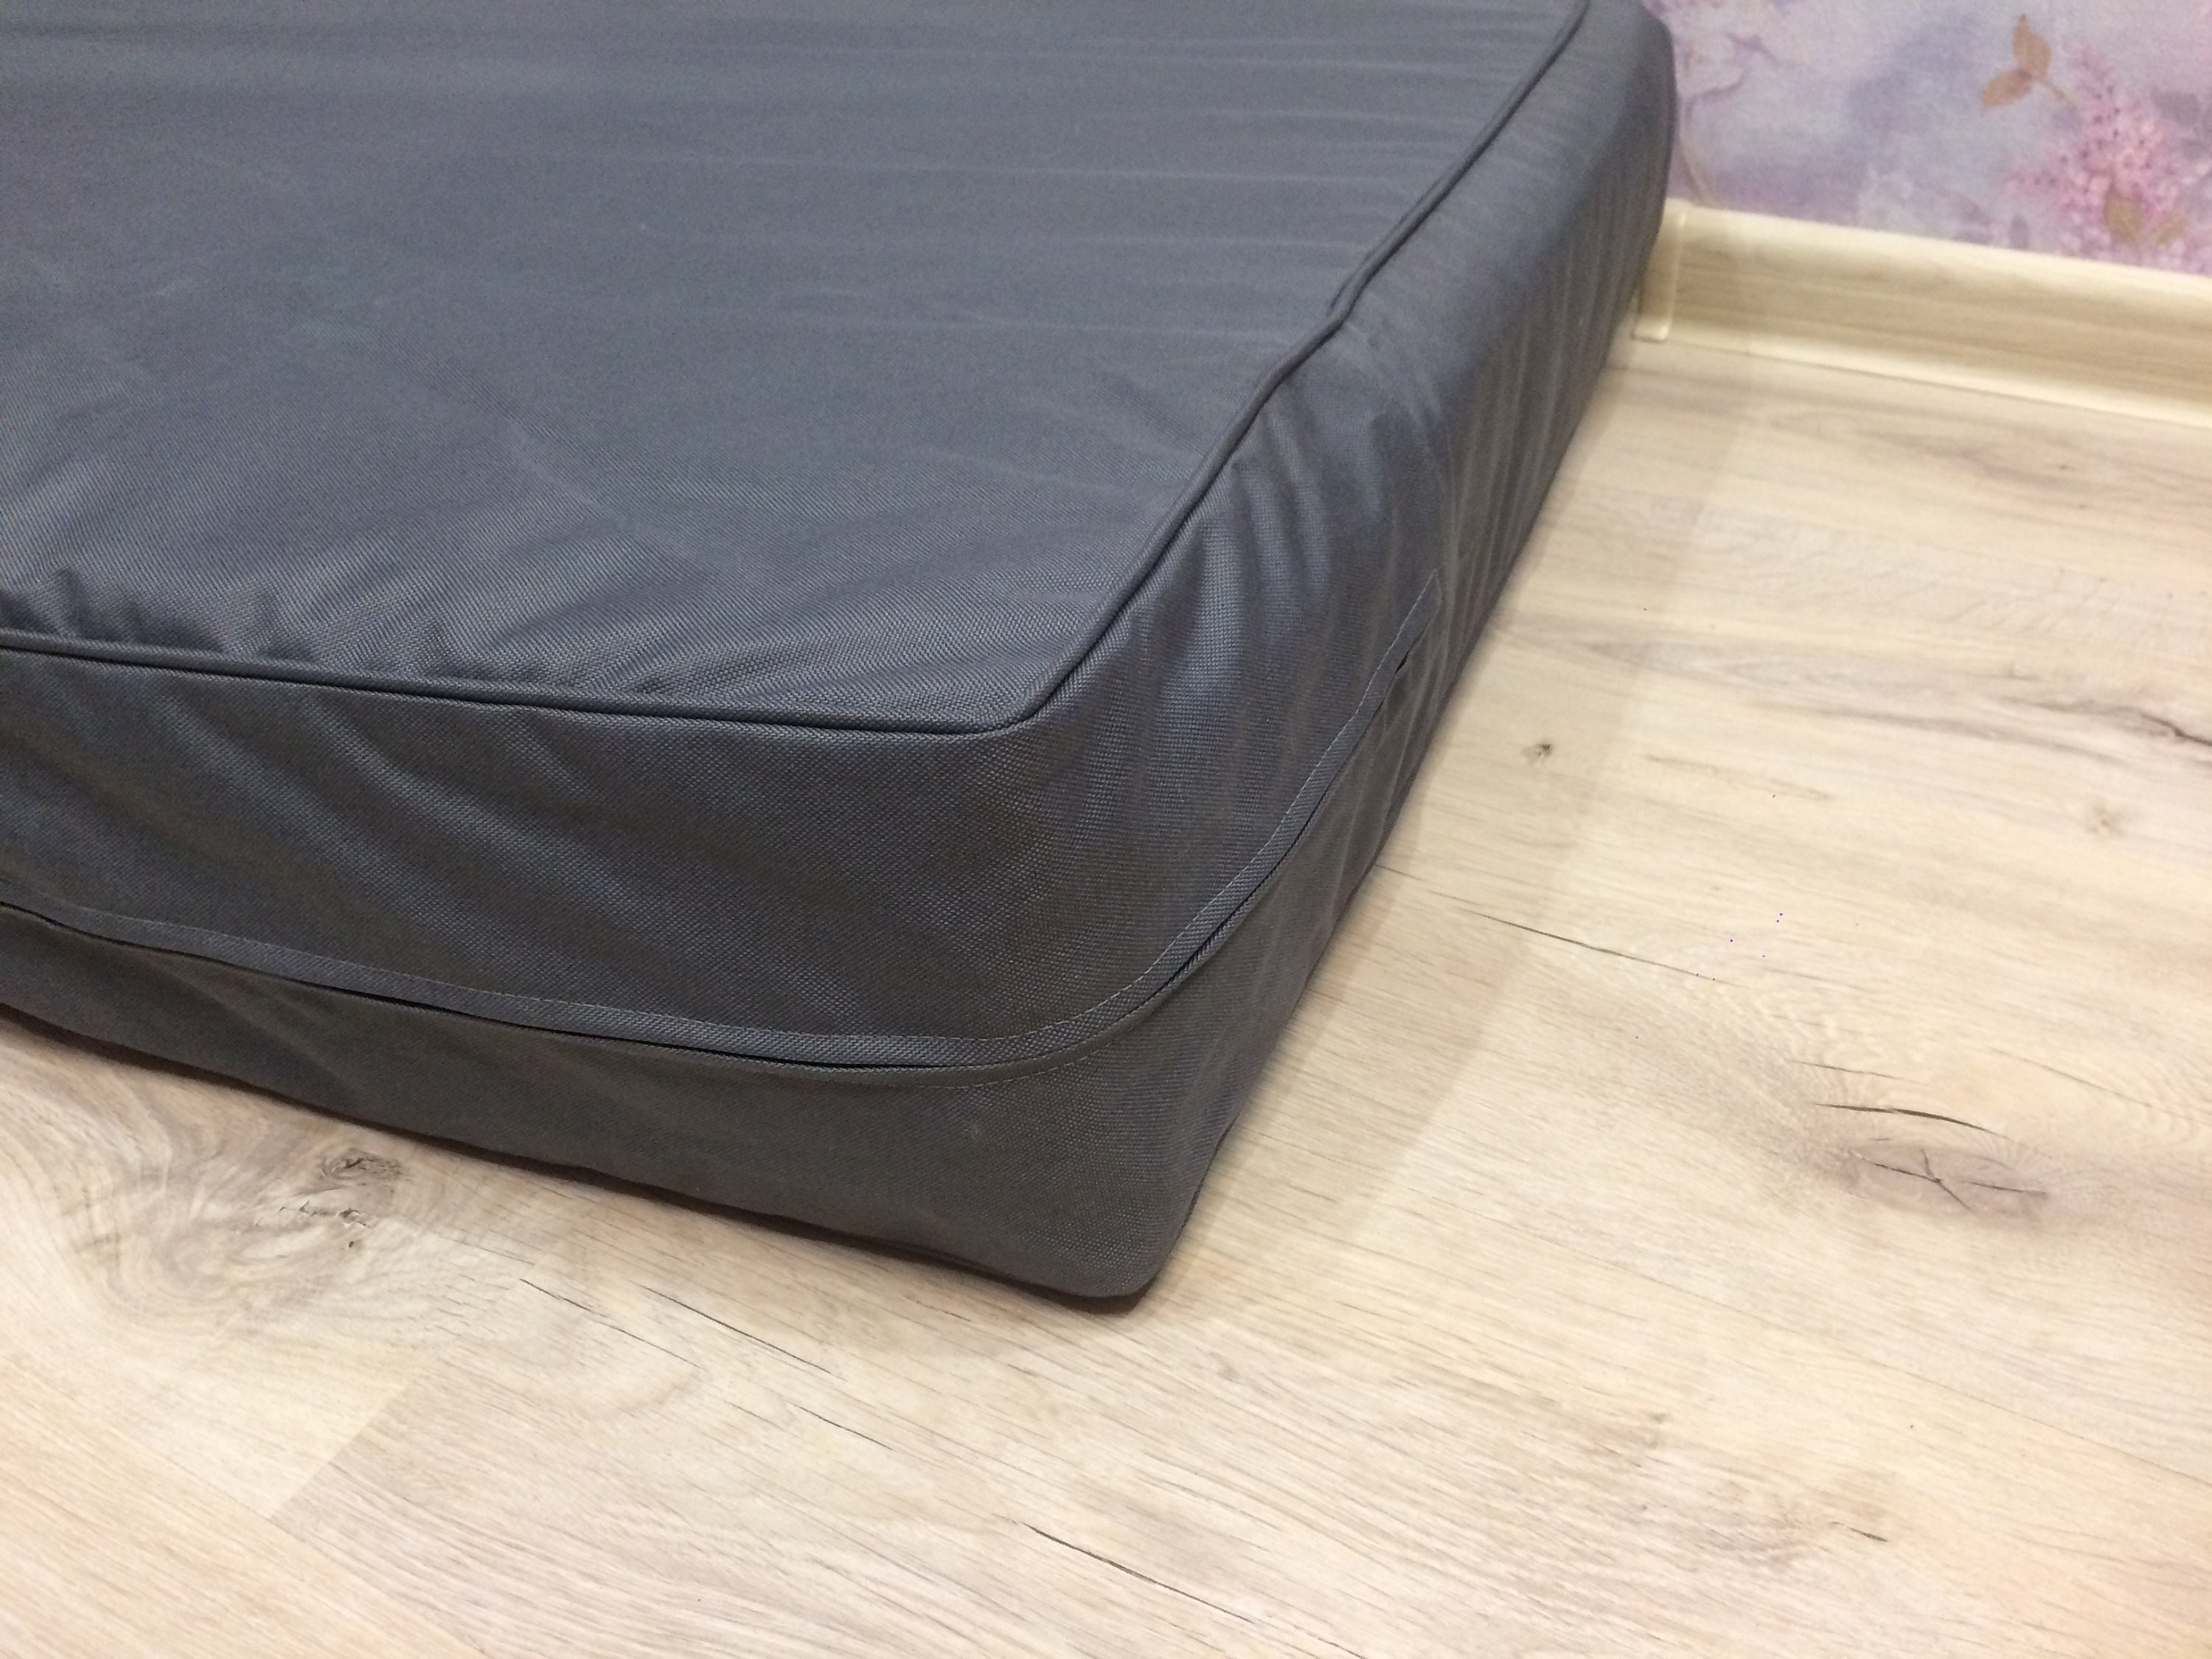 waterproof mattress cover singapore